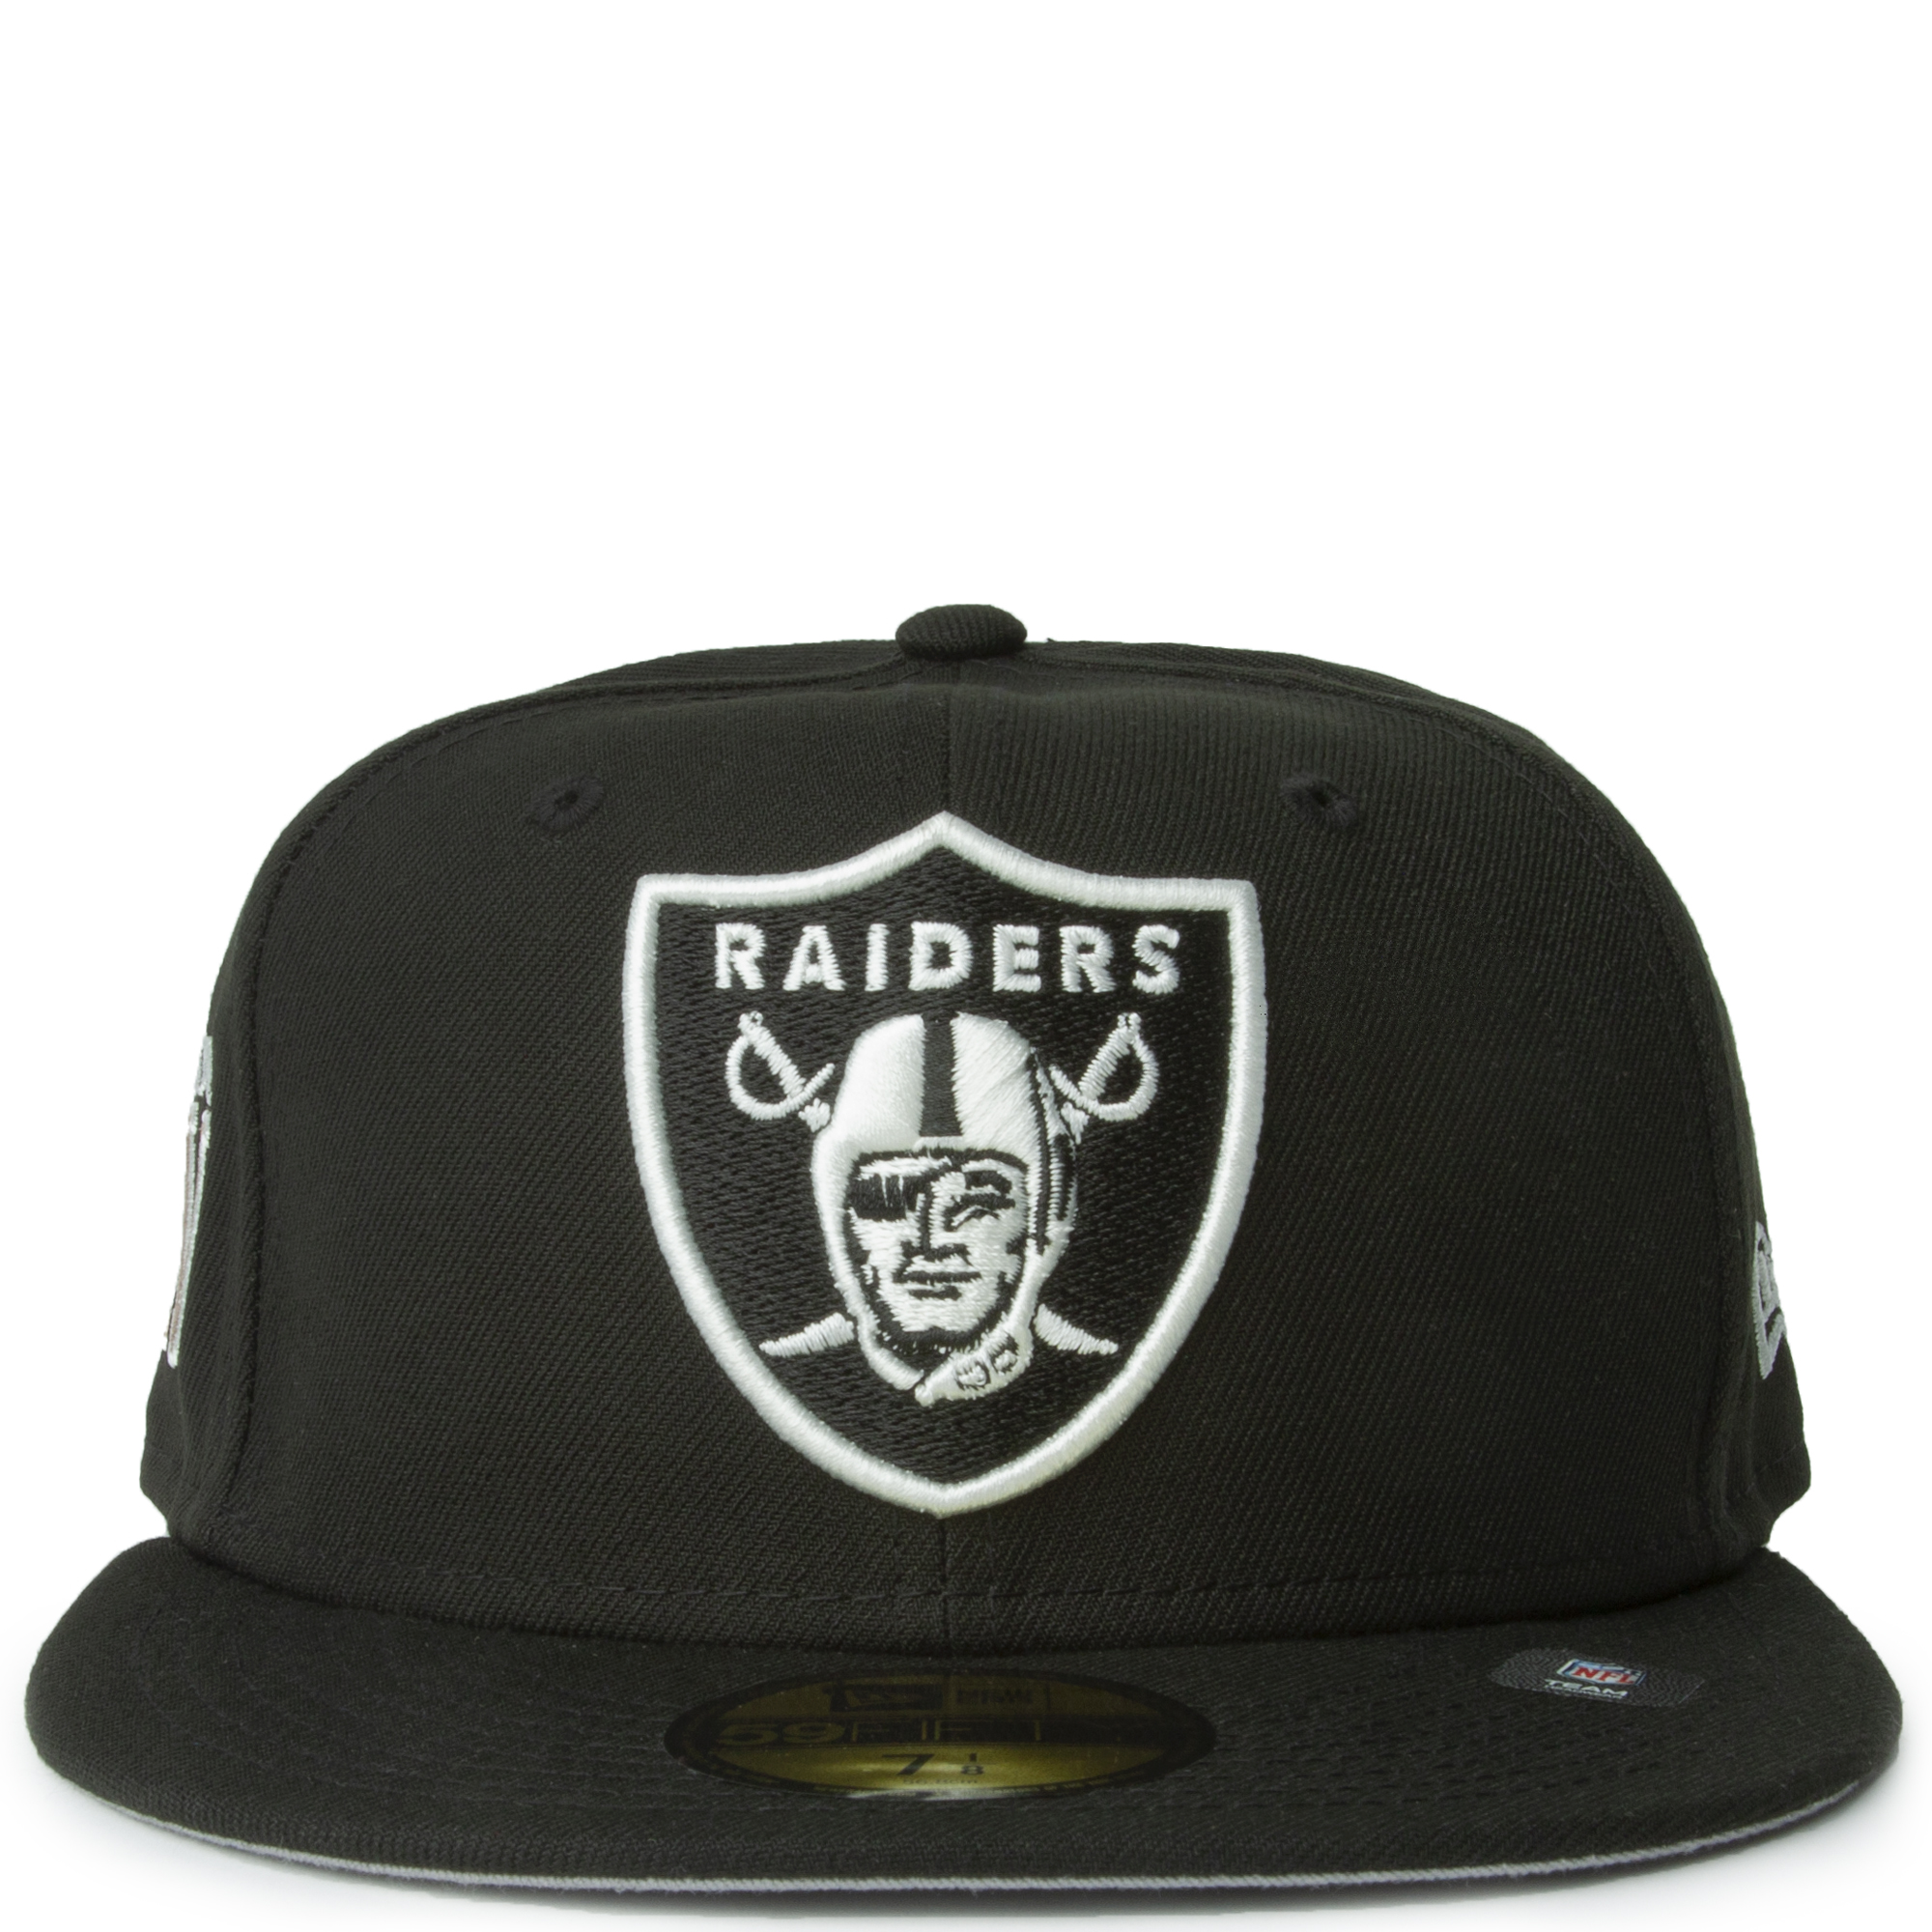 Raiders Caps